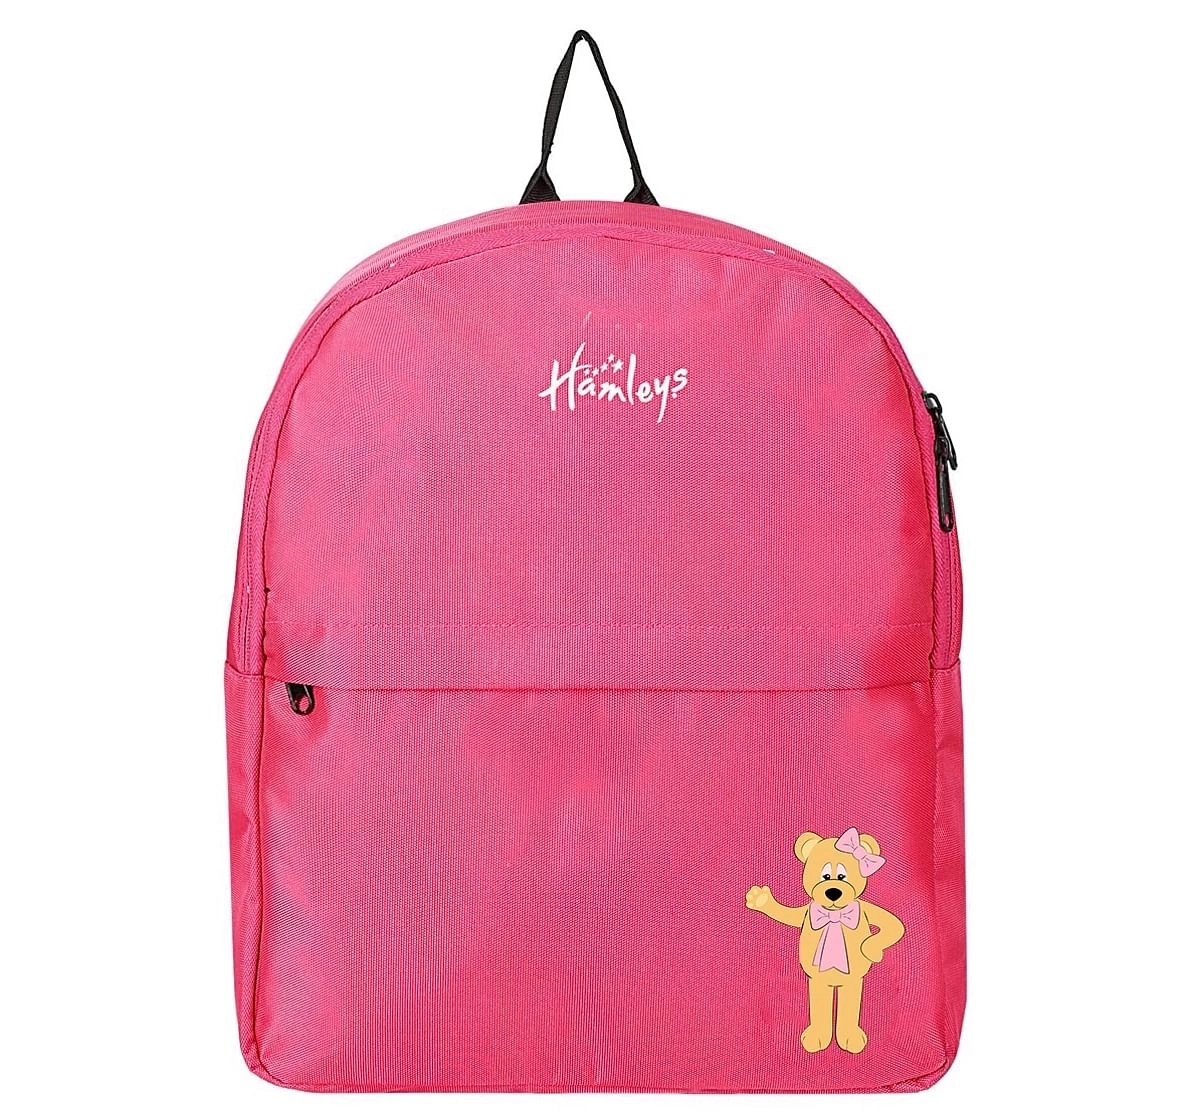 Hamleys School Backpack For Kids, 14Inch, 4Y+, Pink